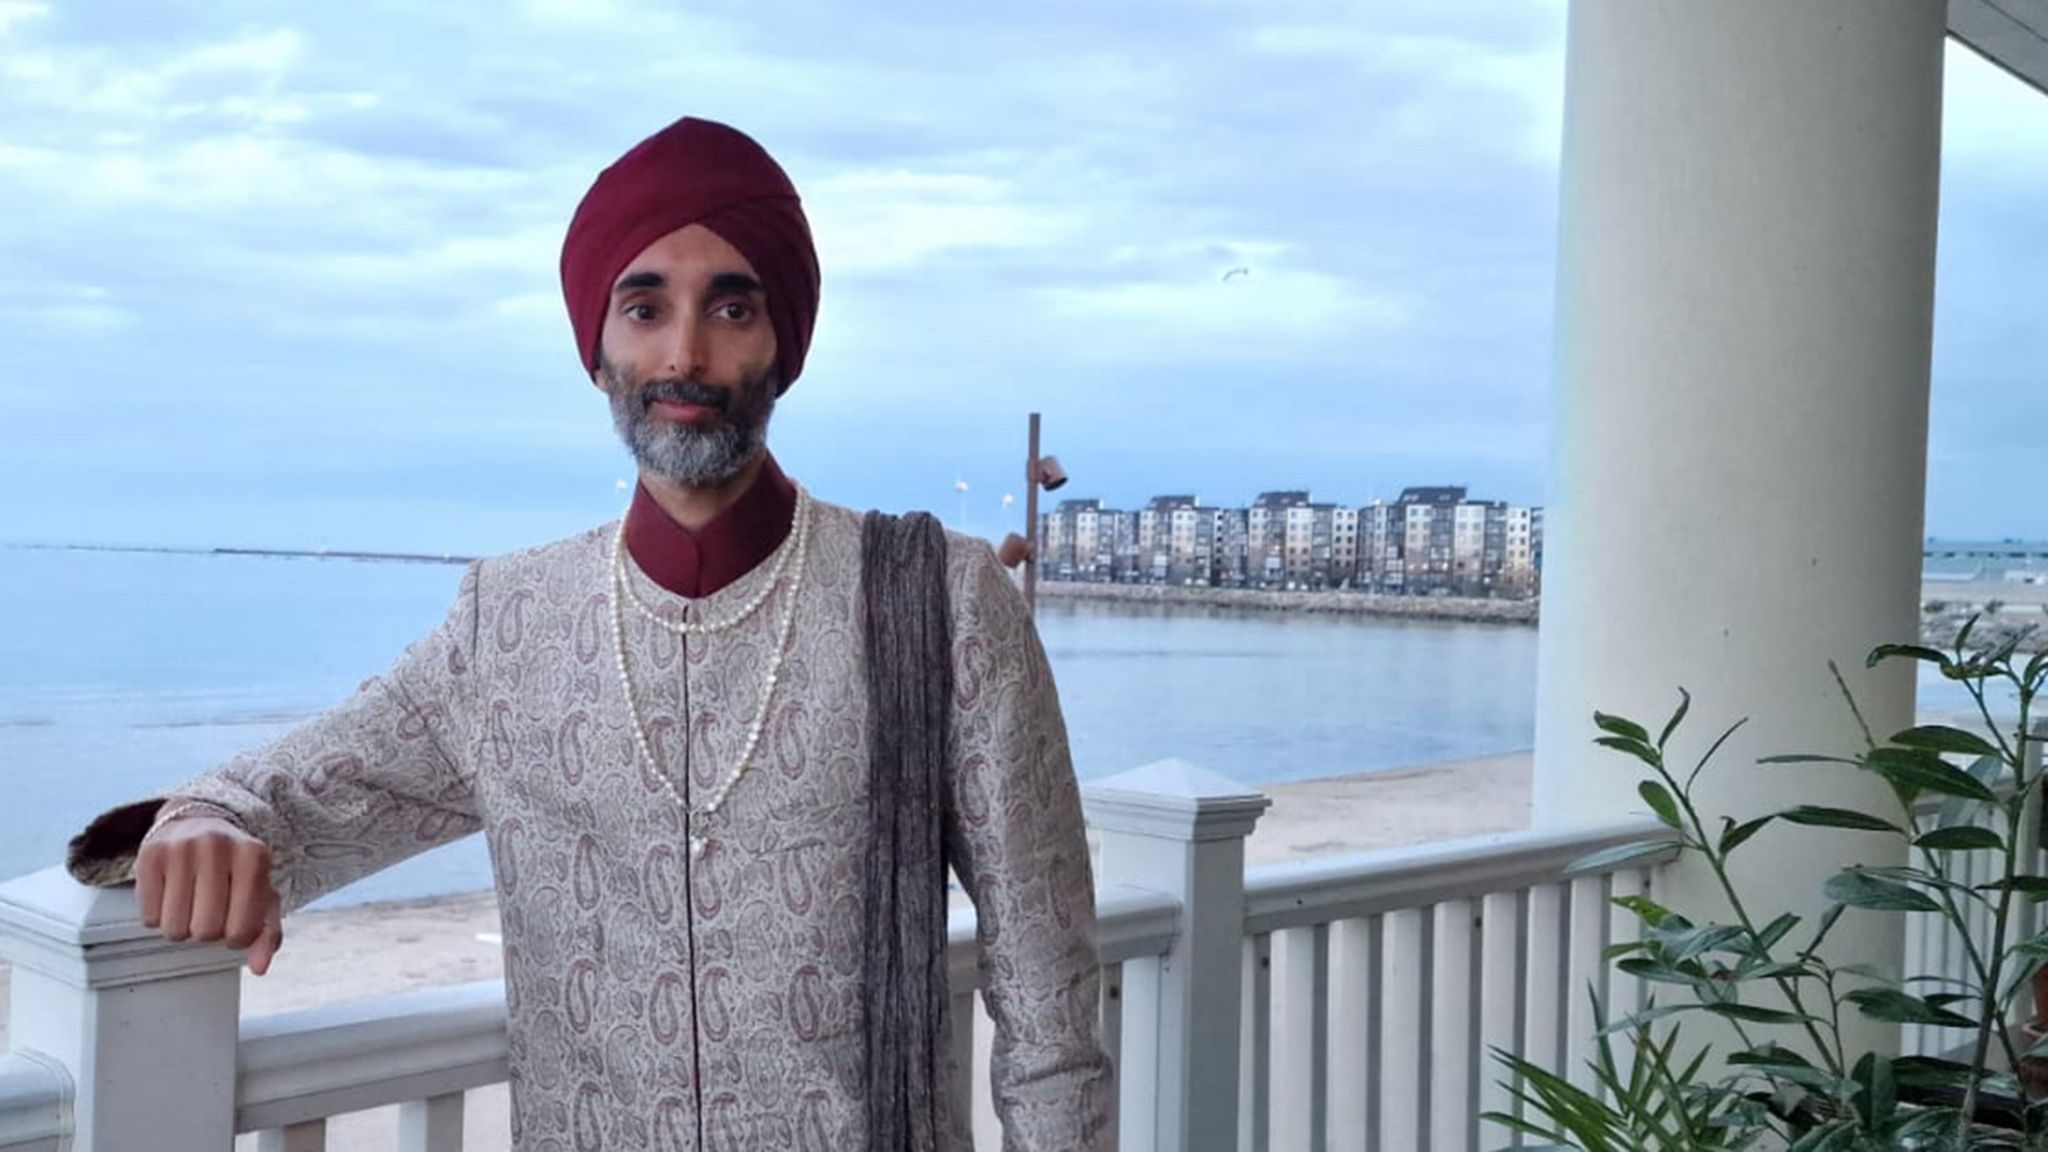 Jasvir Singh in traditional Sikh clothing